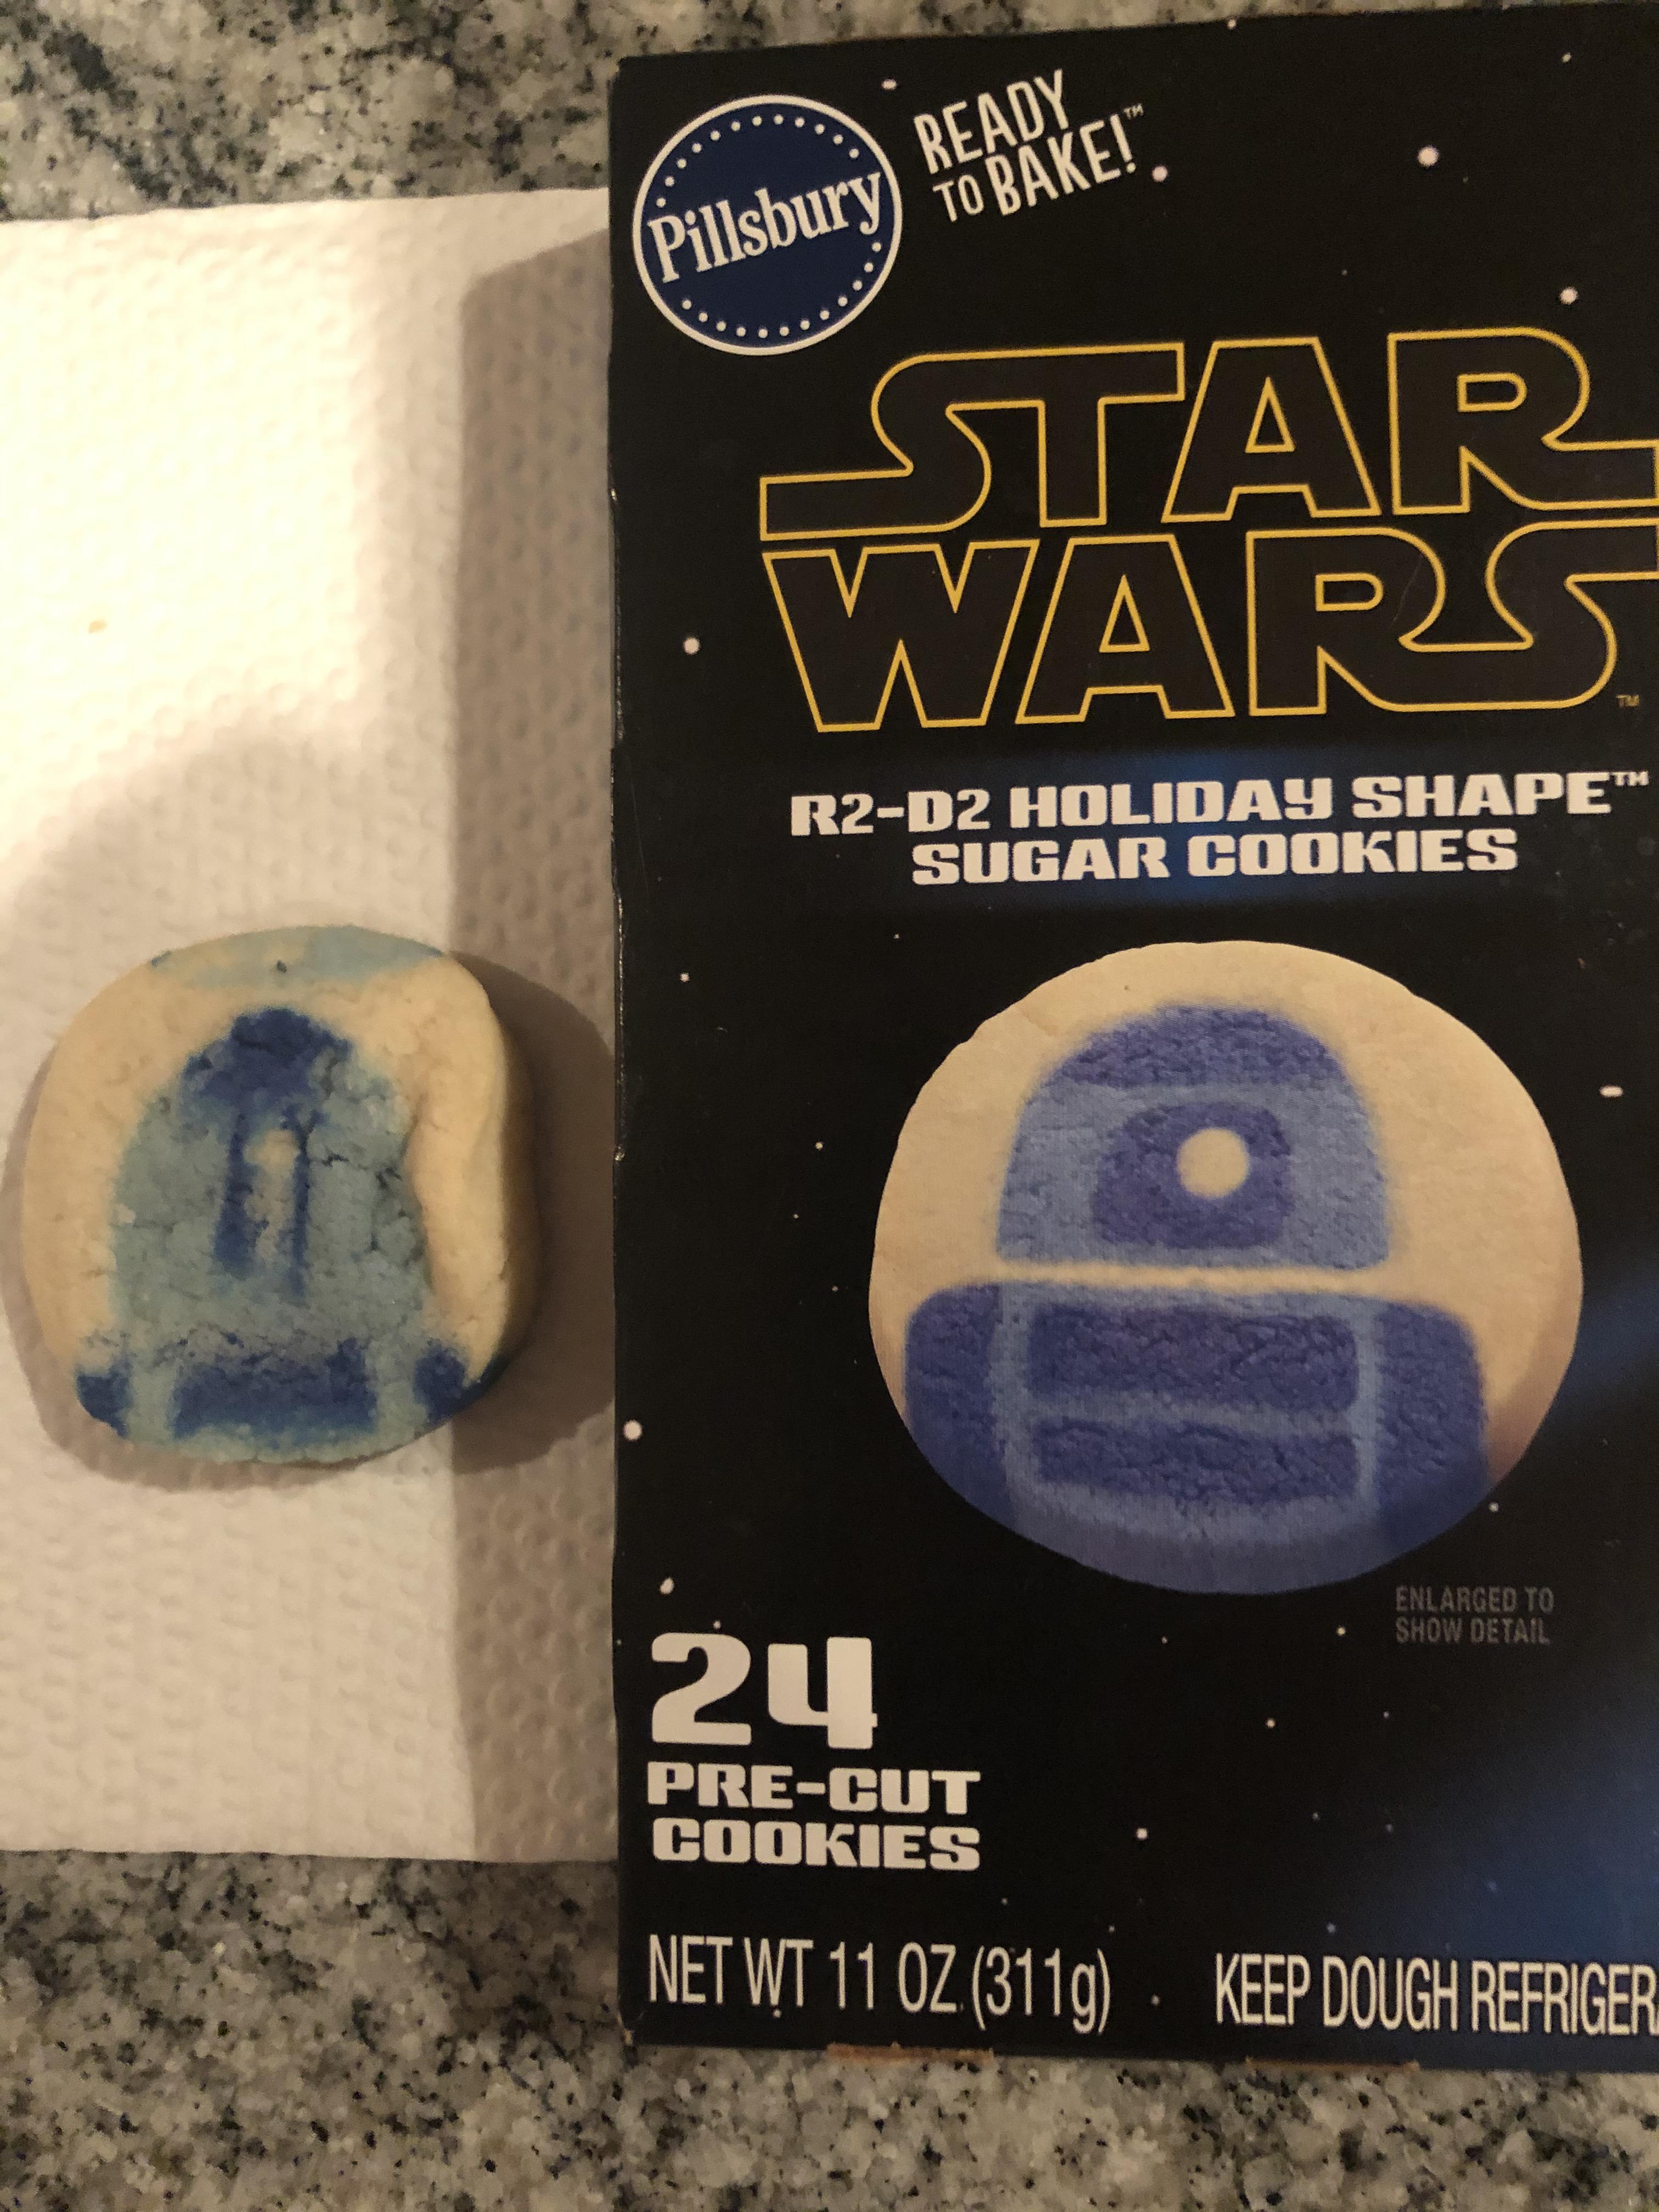 star wars - Star Wap. R2D2 Holiday Shape Sugar Cookies 20 PreCut Cookies Net Wt 11 Oz 3119 Keep Dough Refriger